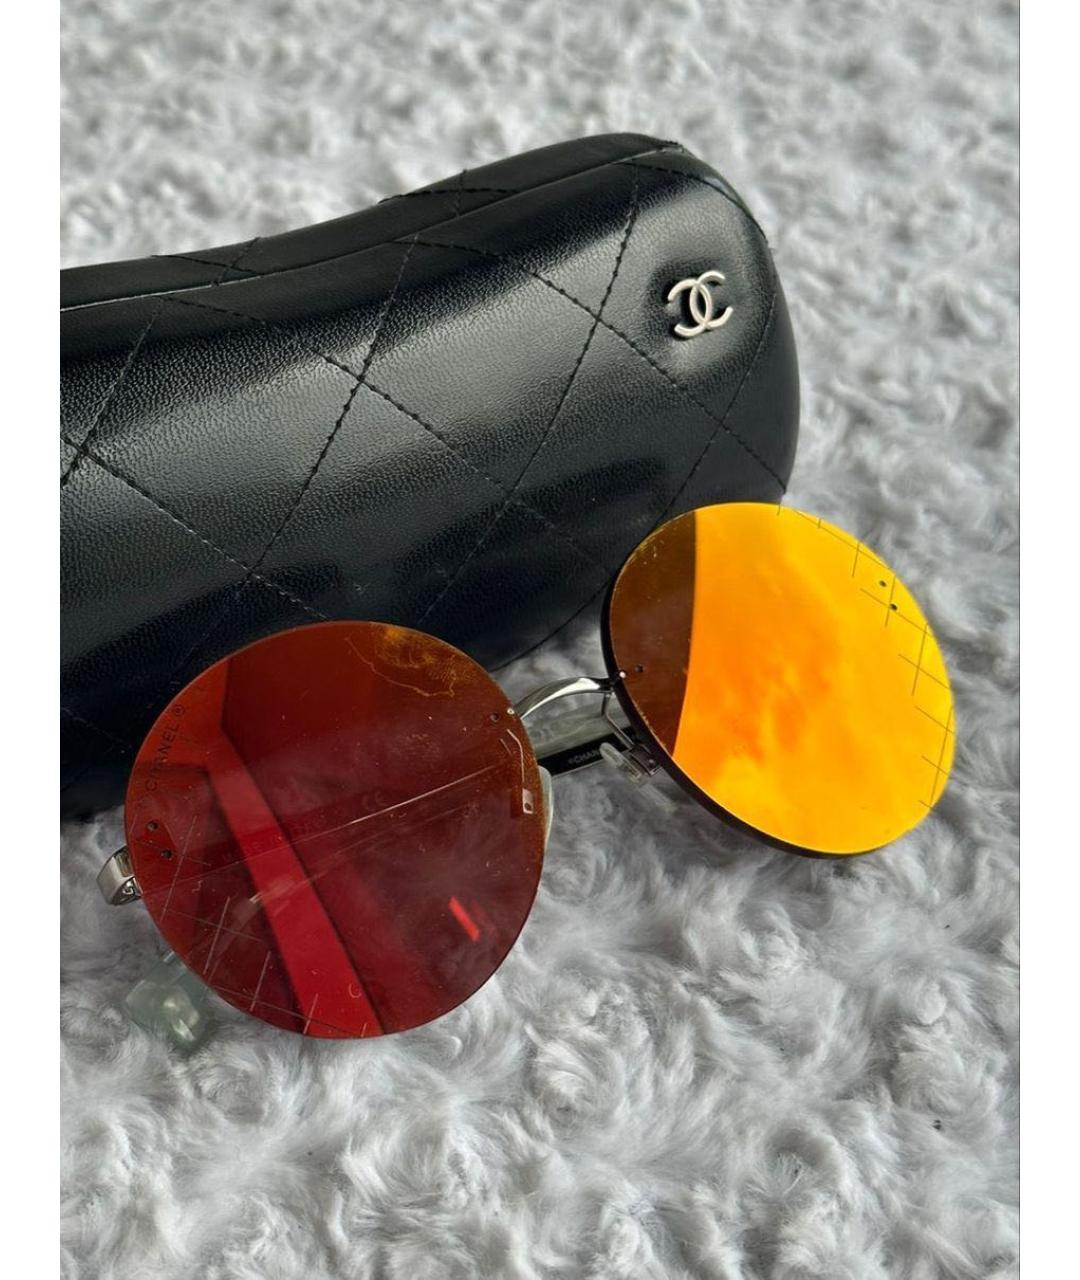 CHANEL PRE-OWNED Оранжевое металлические солнцезащитные очки, фото 2